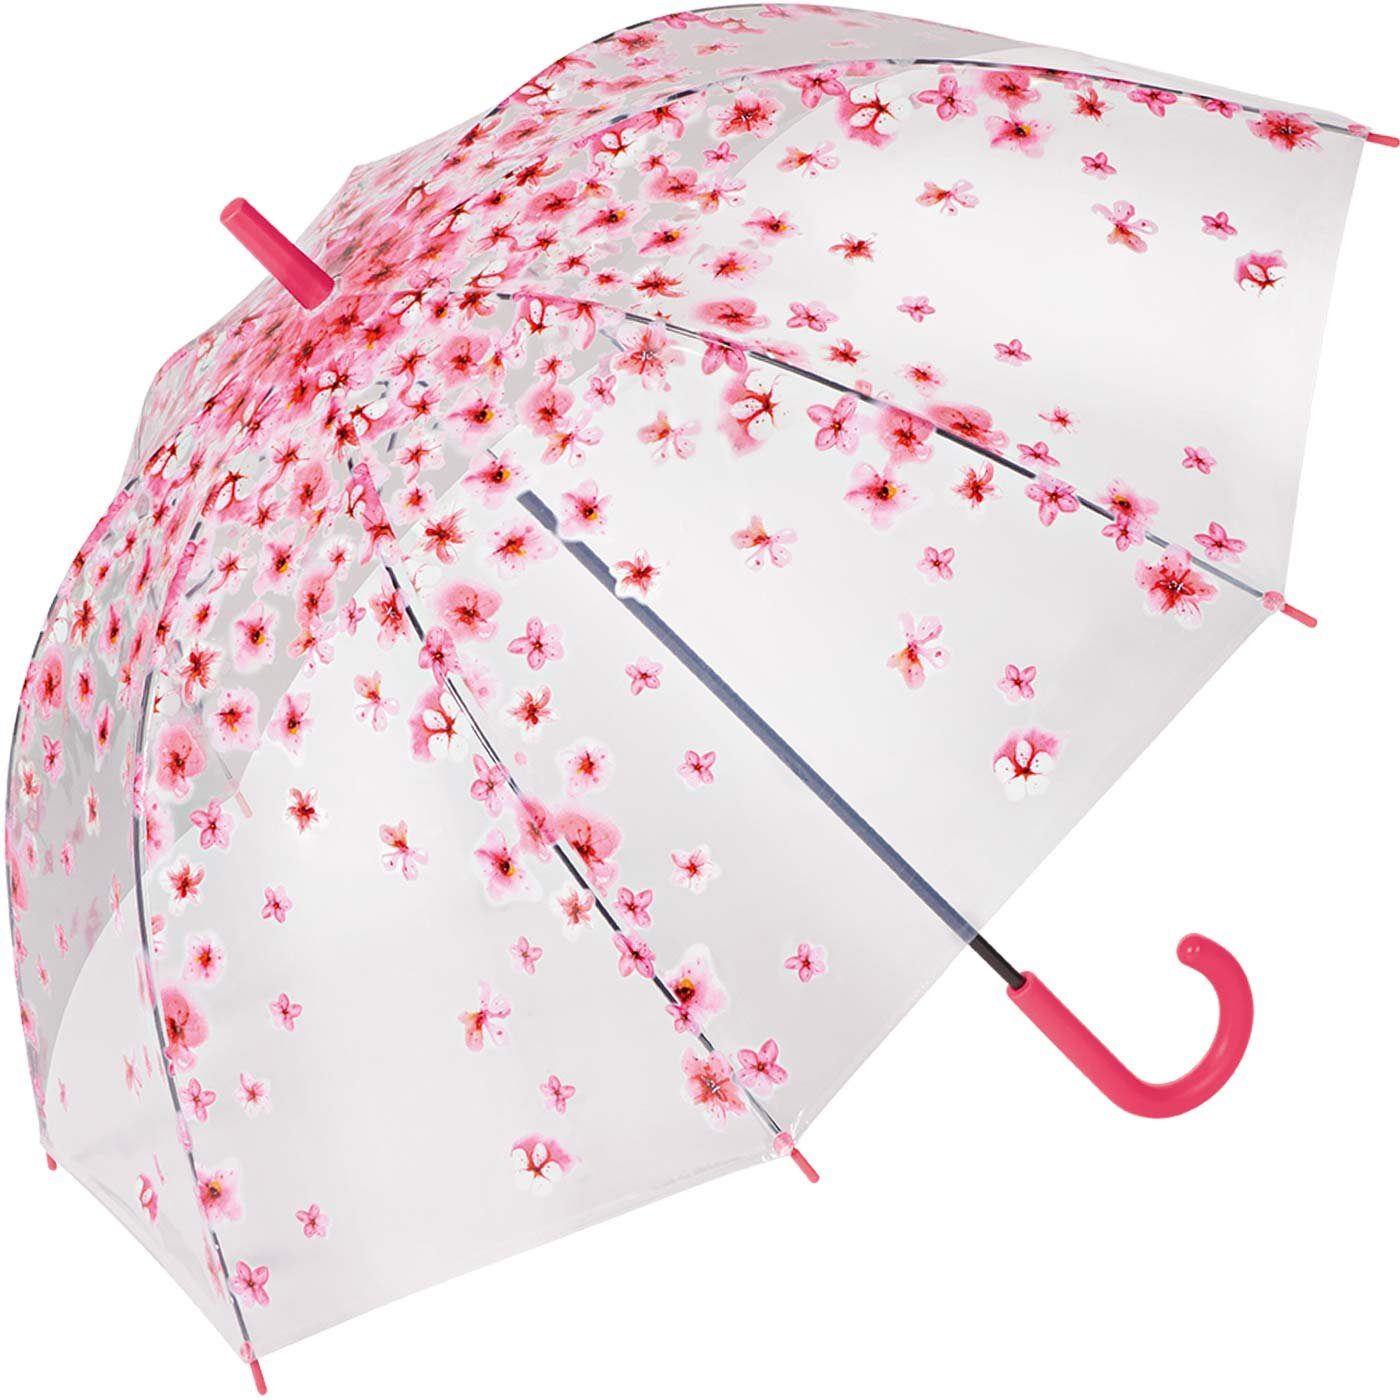 HAPPY RAIN Langregenschirm durchsichtiger, stabiler pinkfarbenen Blüten bedruckt mit Damen-Transparentschirm